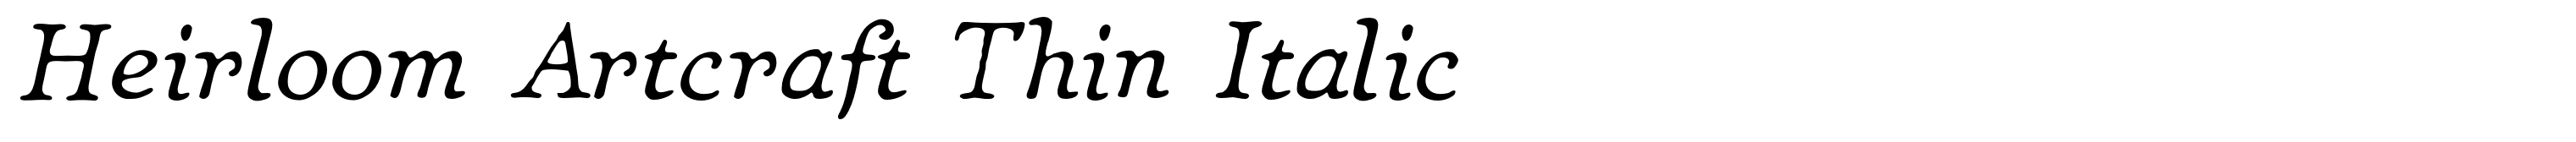 Heirloom Artcraft Thin Italic